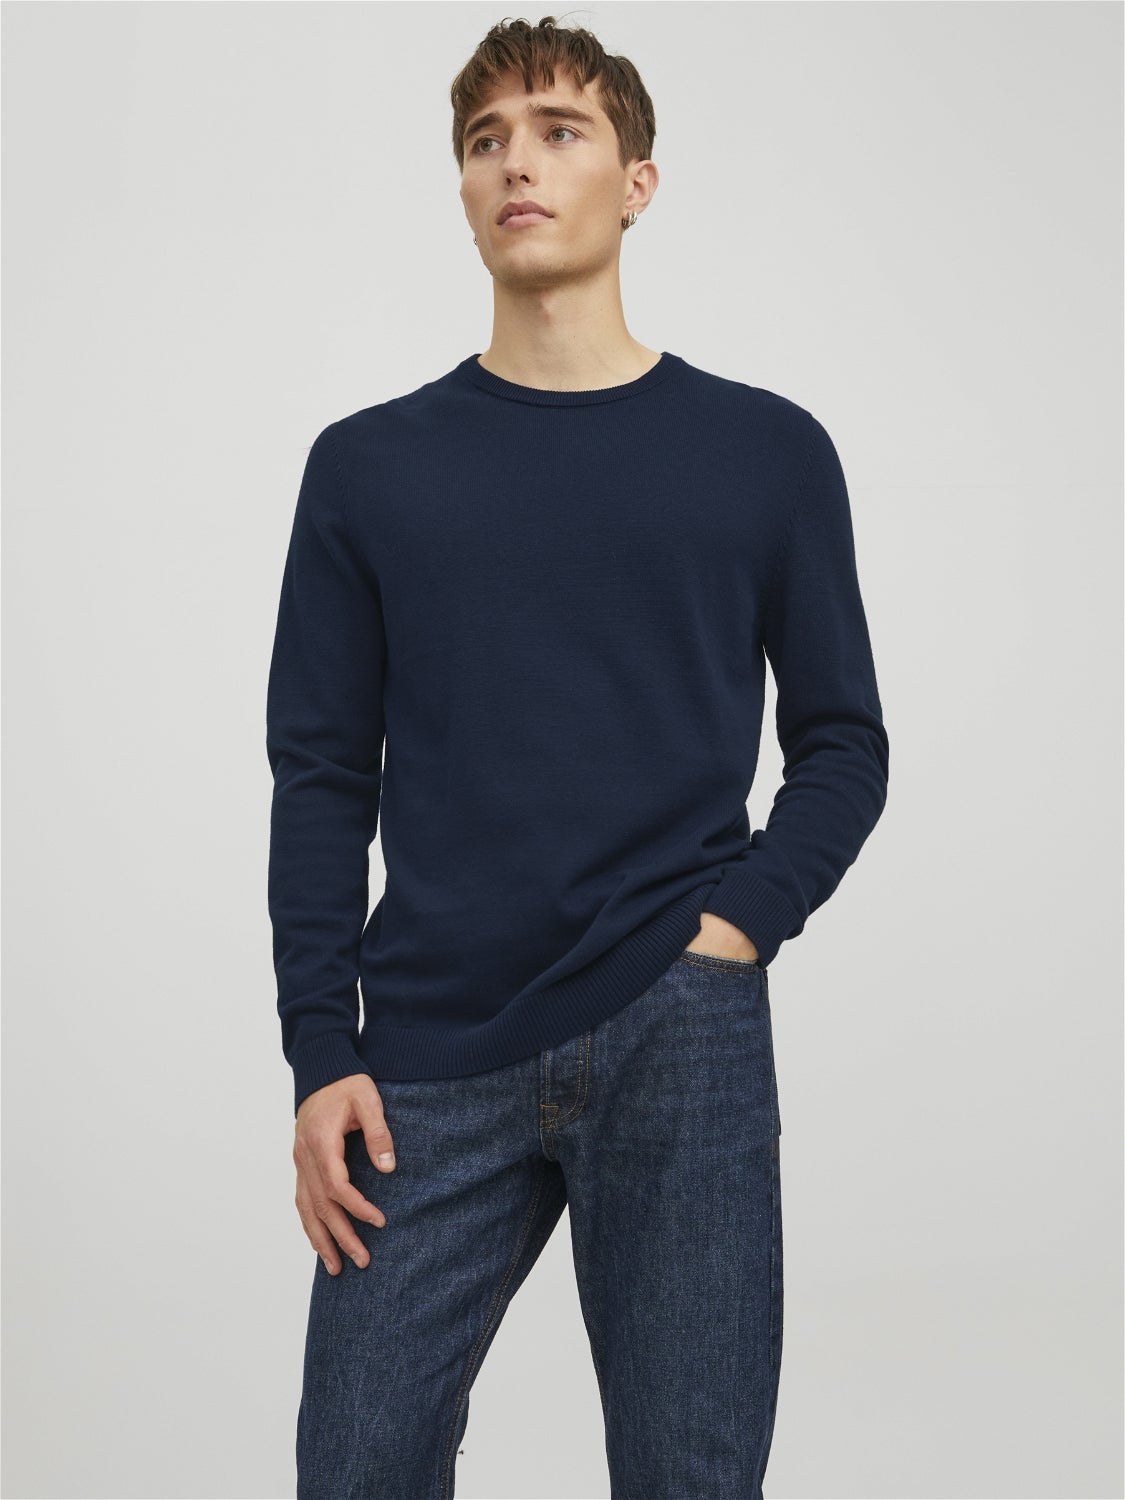 discount 93% Navy Blue/Blue M Jack & Jones jumper MEN FASHION Jumpers & Sweatshirts Elegant 